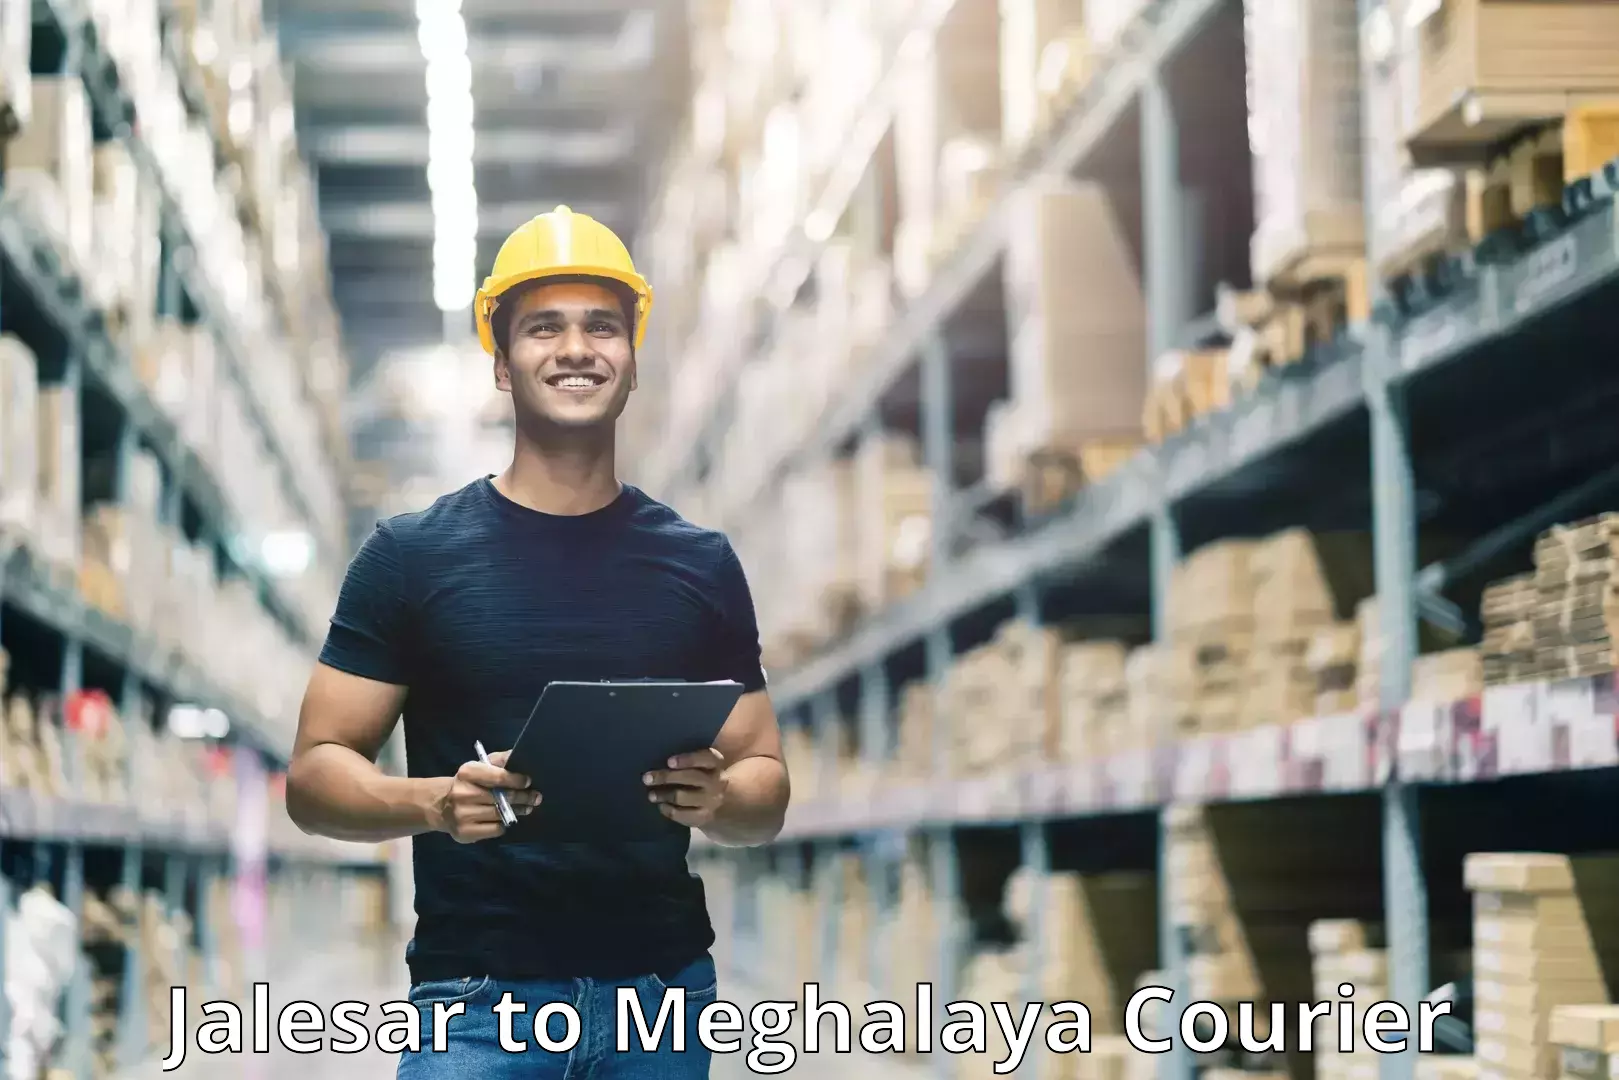 Courier service booking Jalesar to Meghalaya